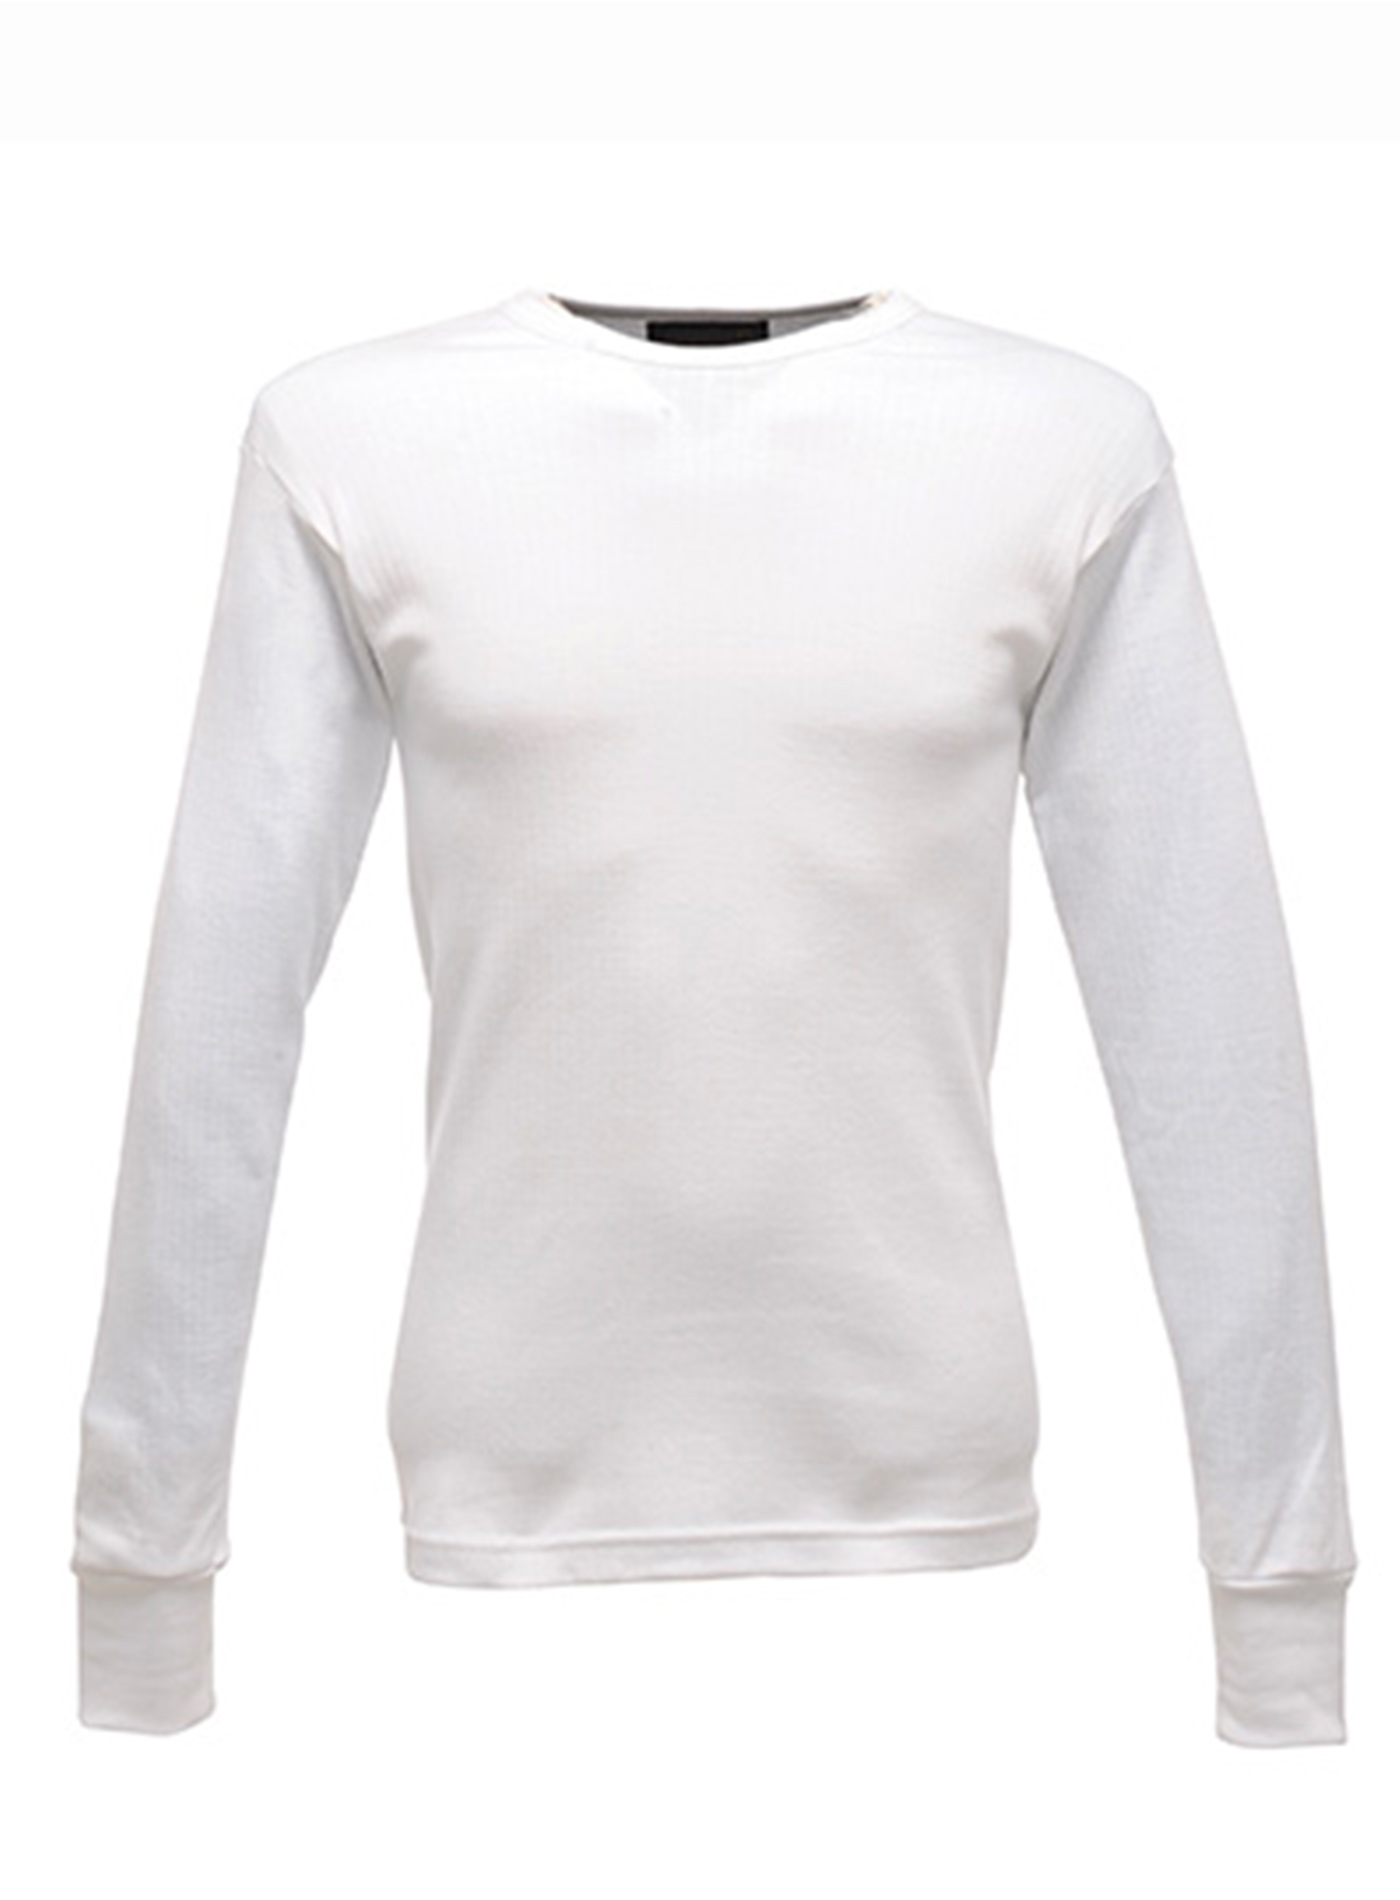 Pánské tričko Thermal - Bílá L